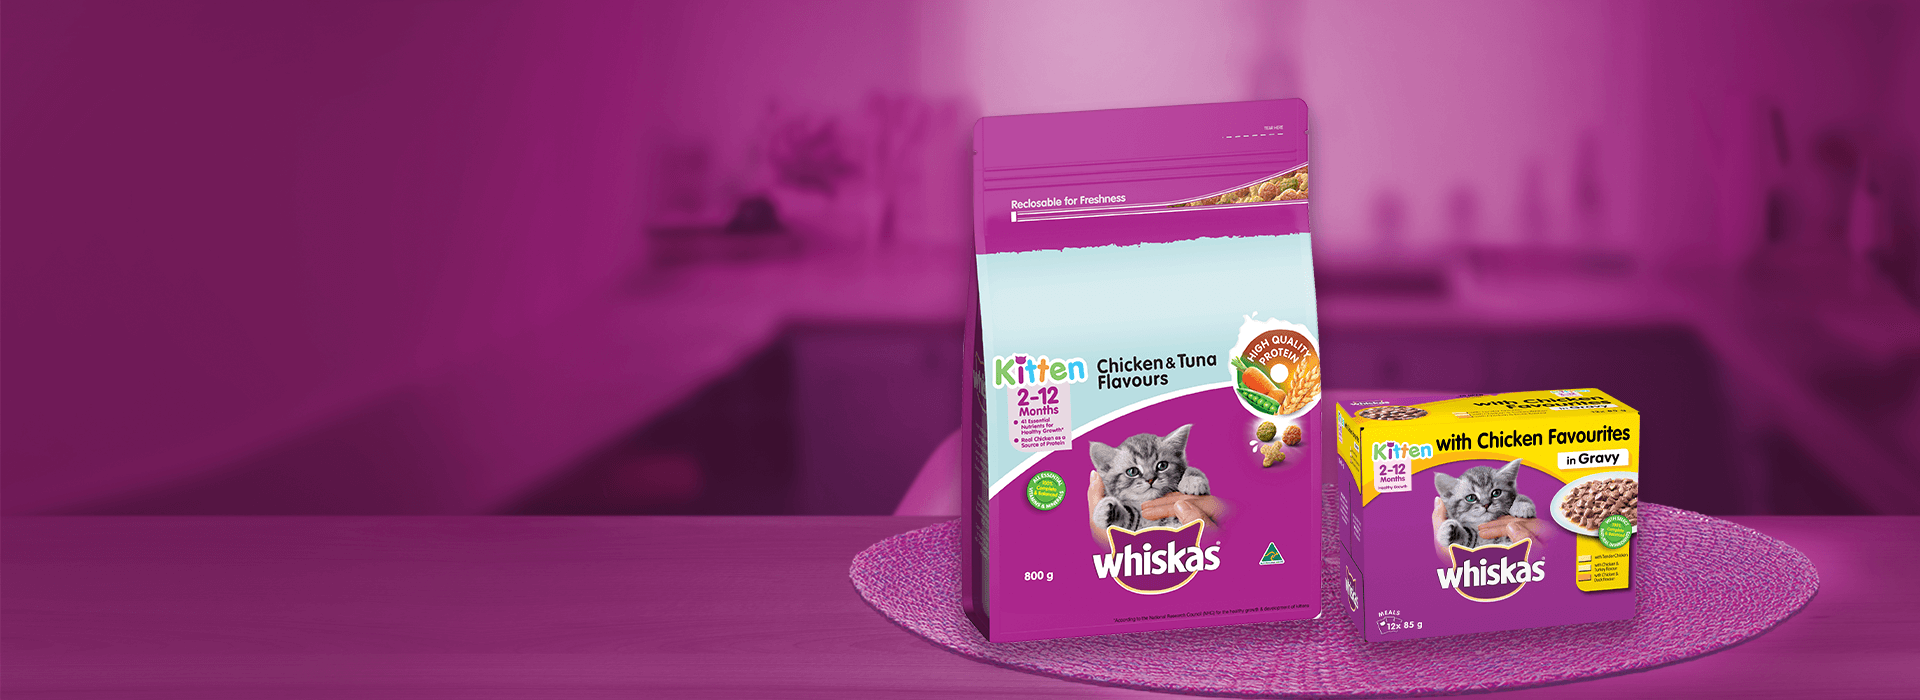 whiskas kitten products hero image